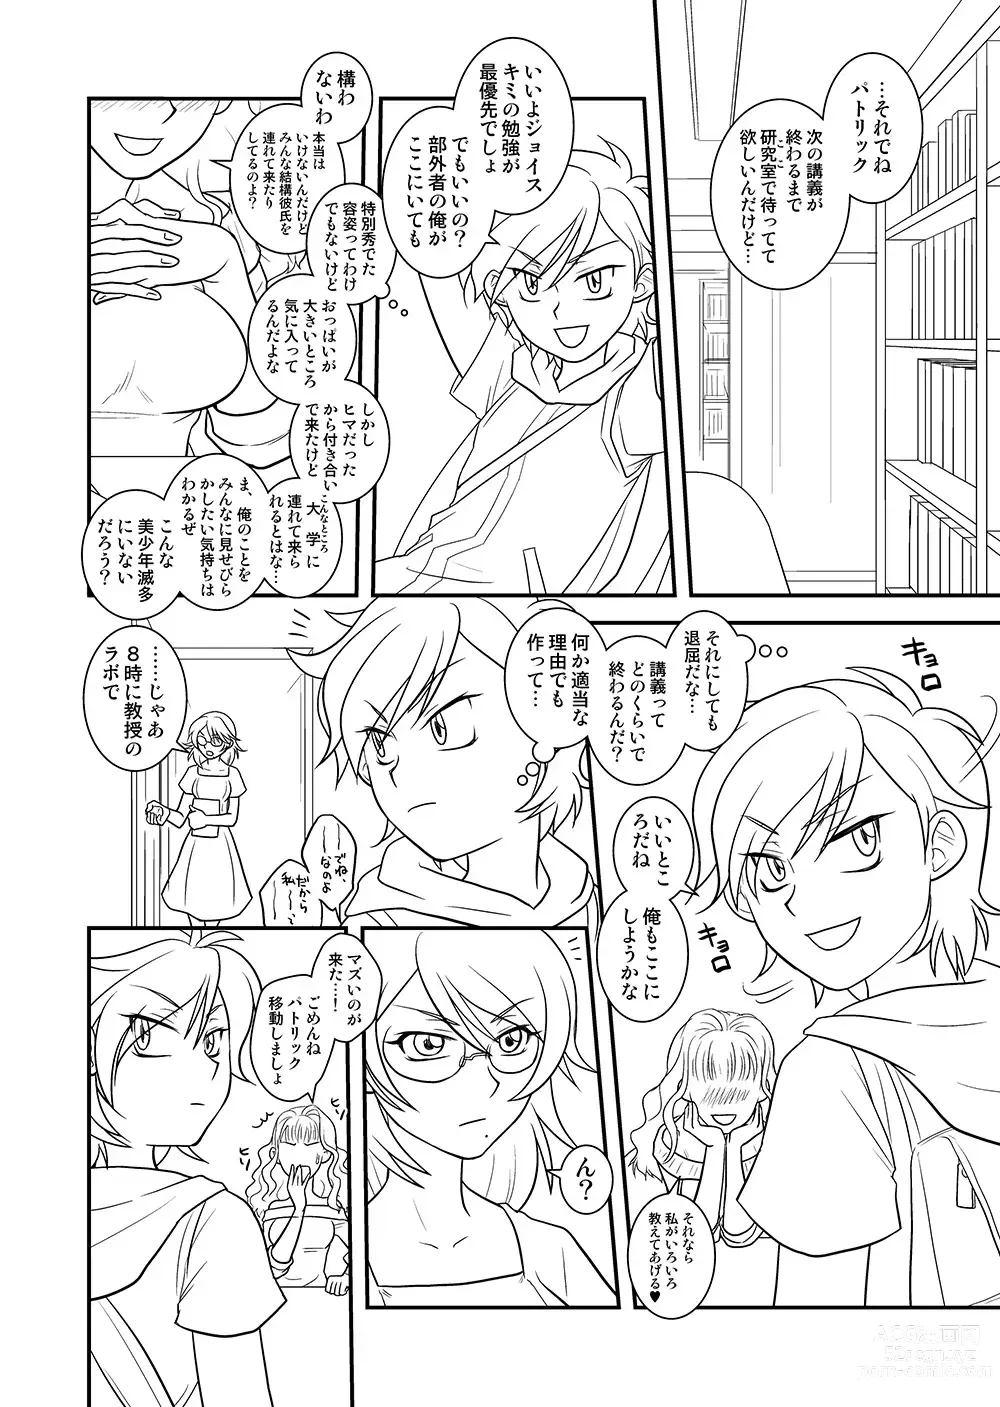 Page 3 of doujinshi Taisa to Ore.